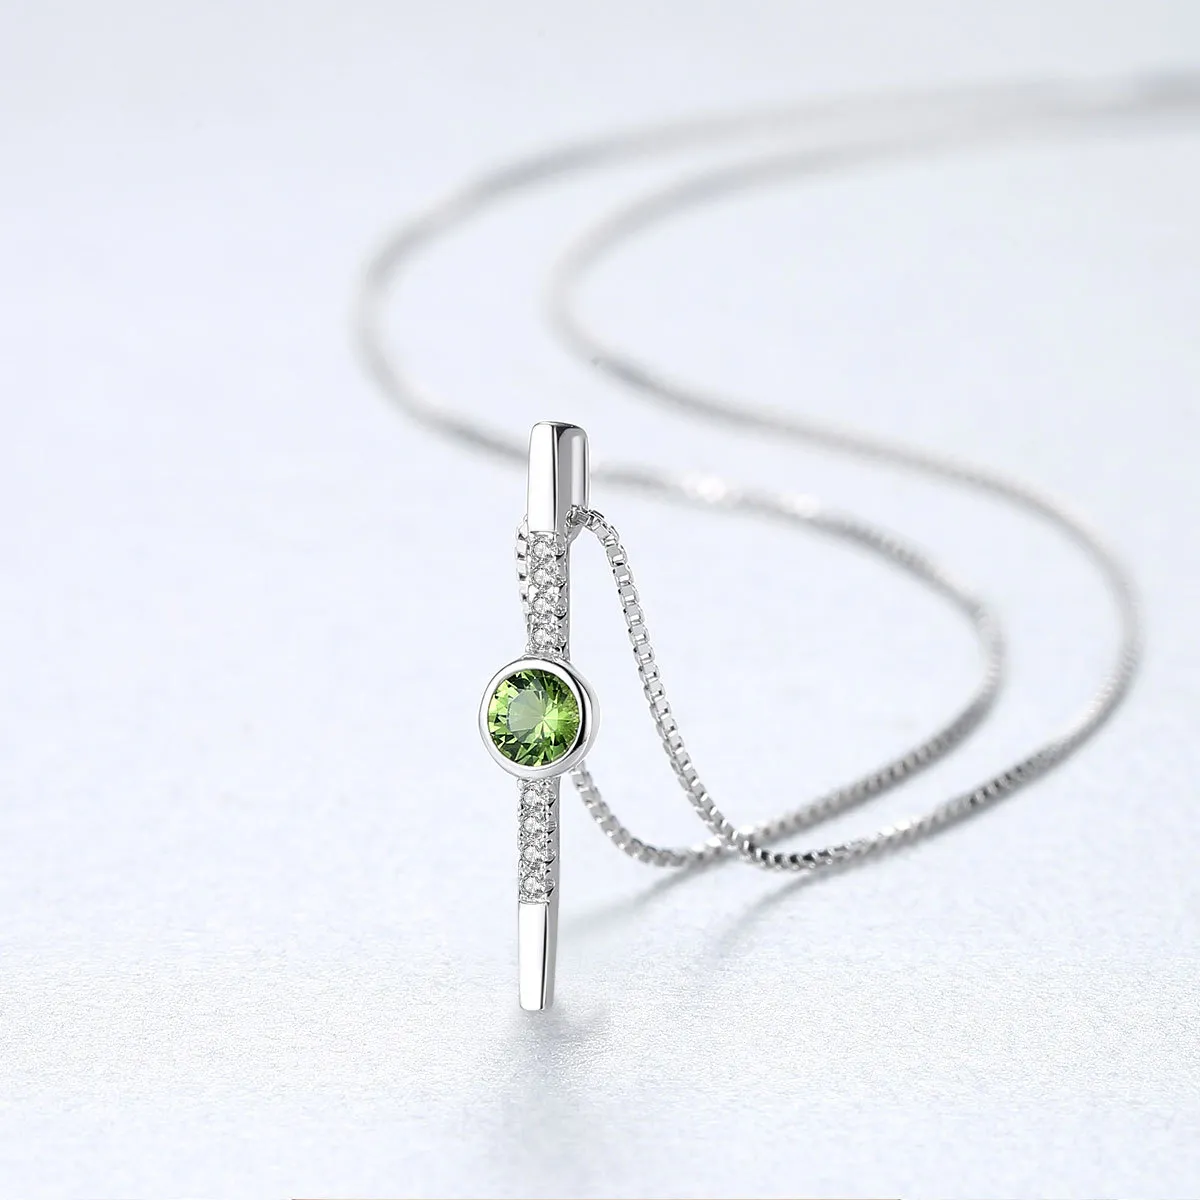 European style olive green gemstones925 silver pendant necklace minimalist design micro-set zircon women box chain necklace jewelry accessories